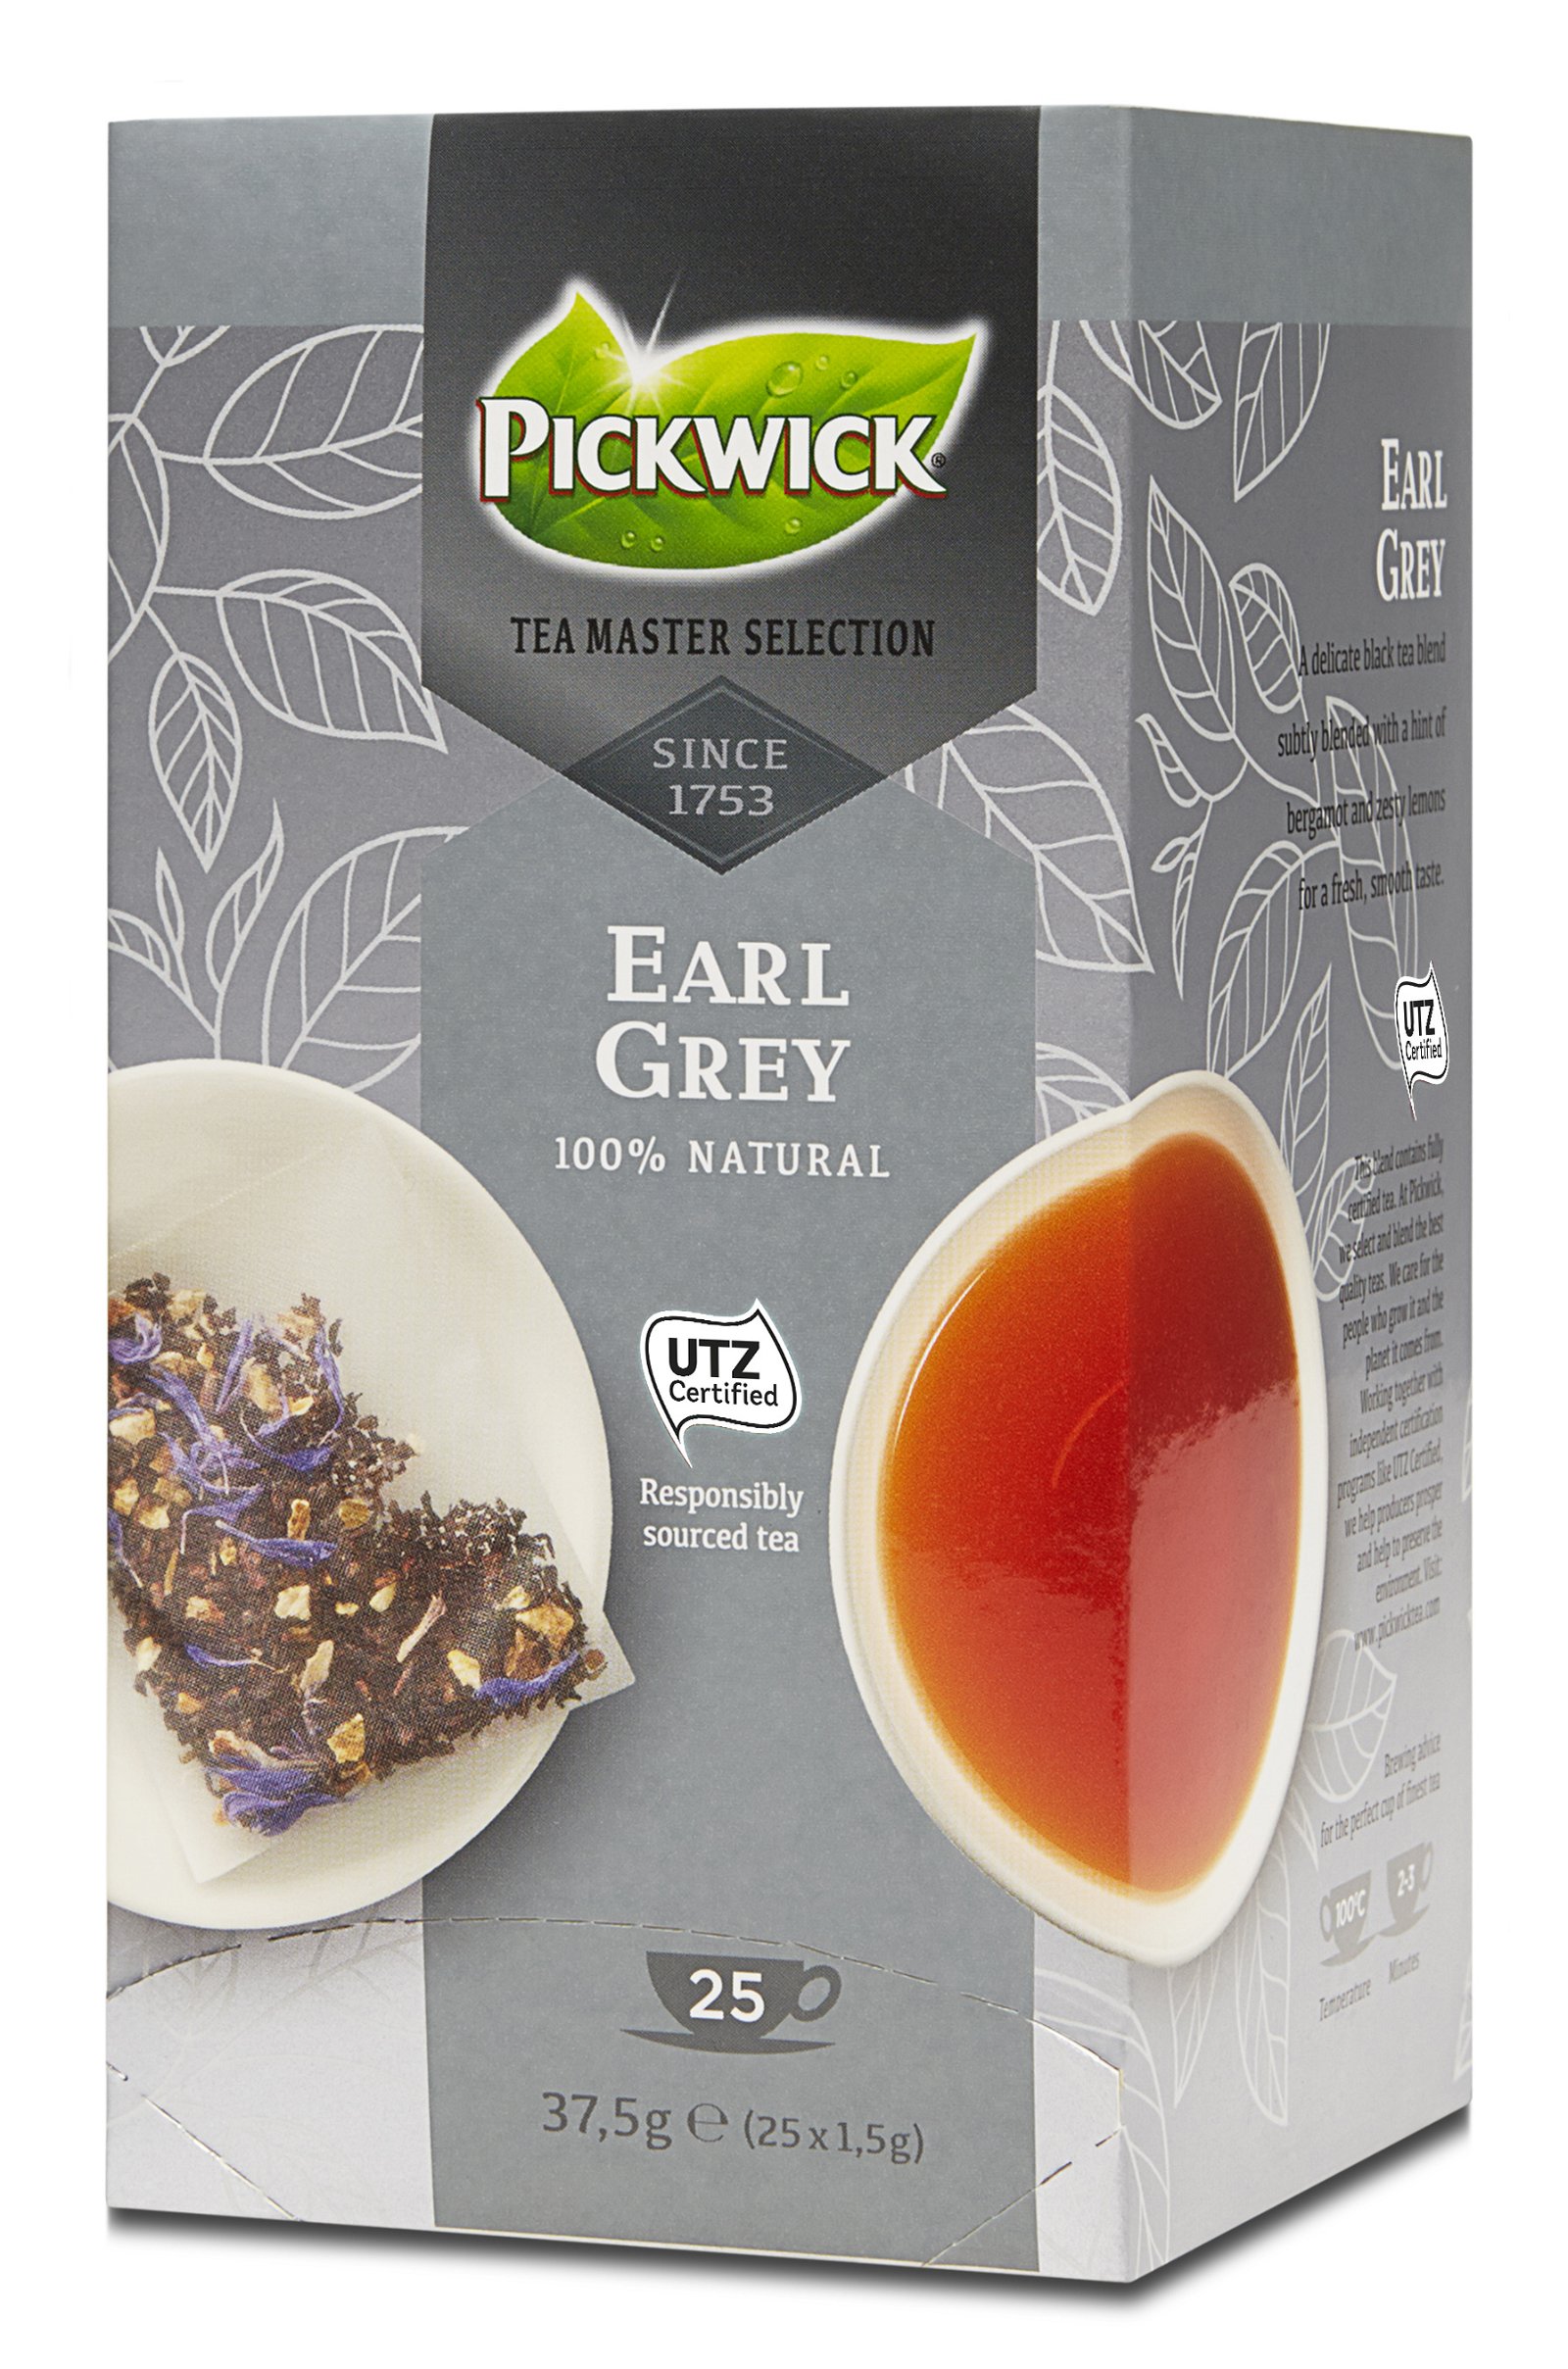 Pickwick Tea Master Selection